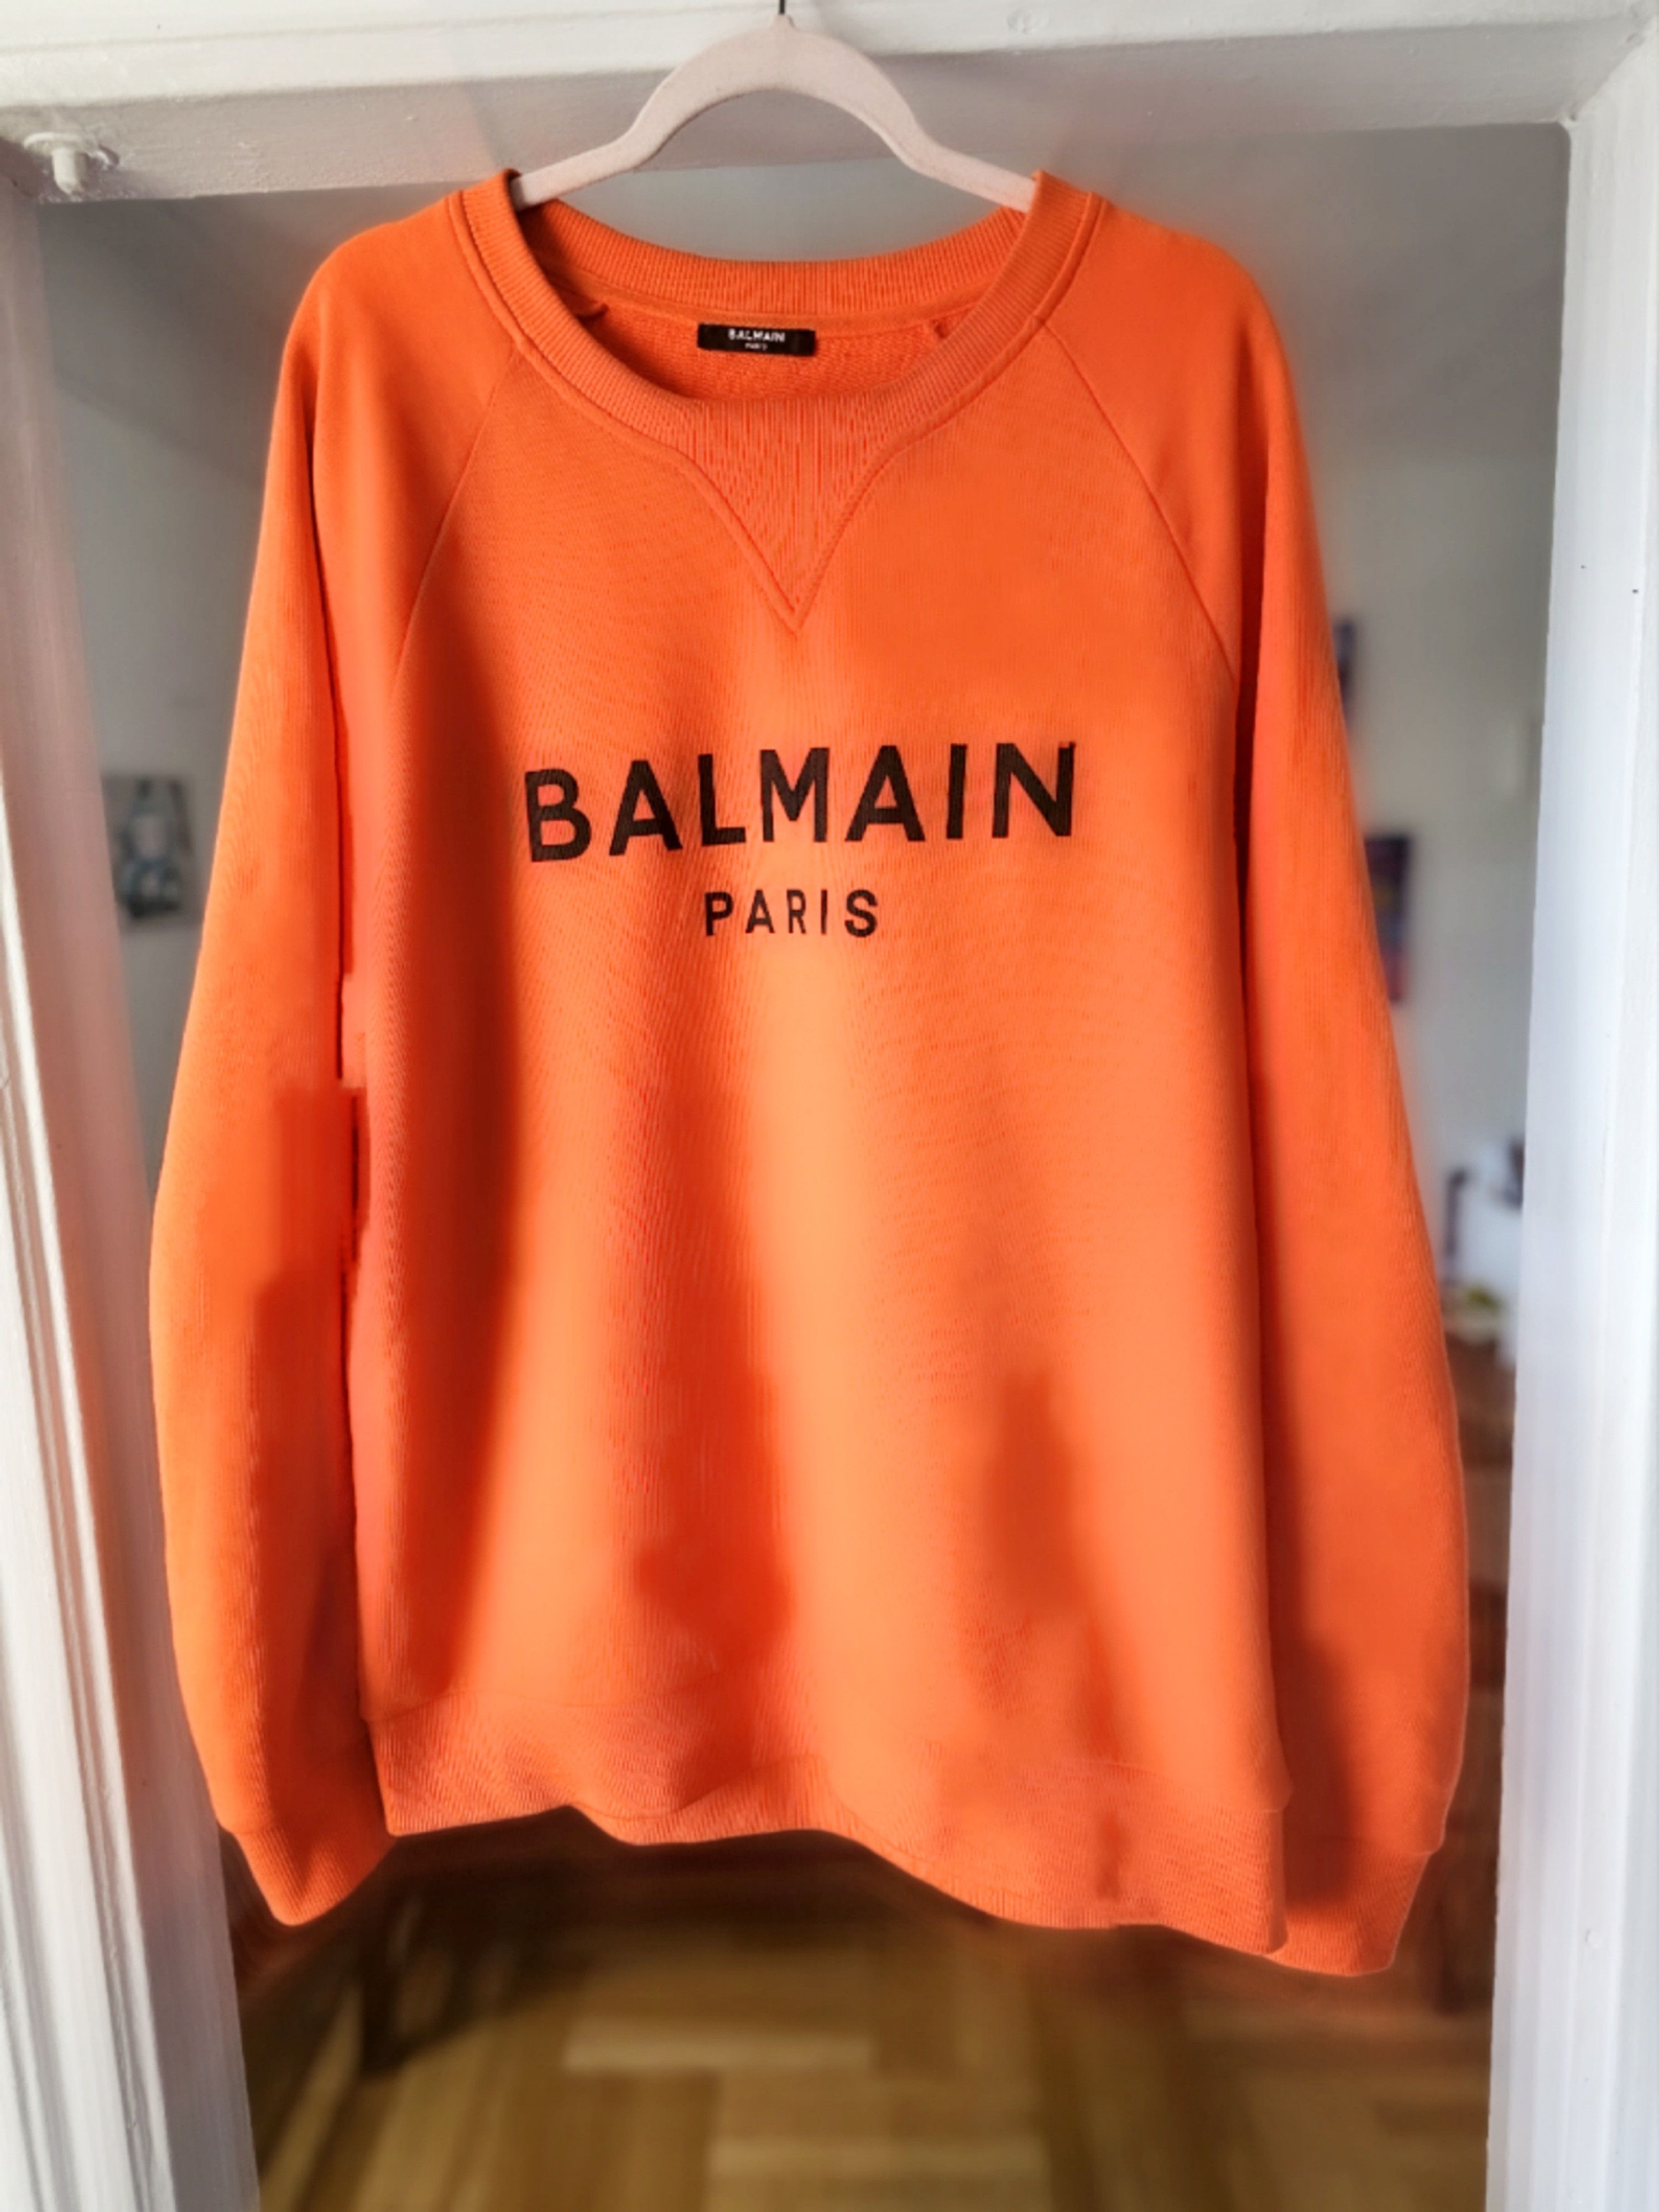 Balmain Orange Printed Sweatshirt